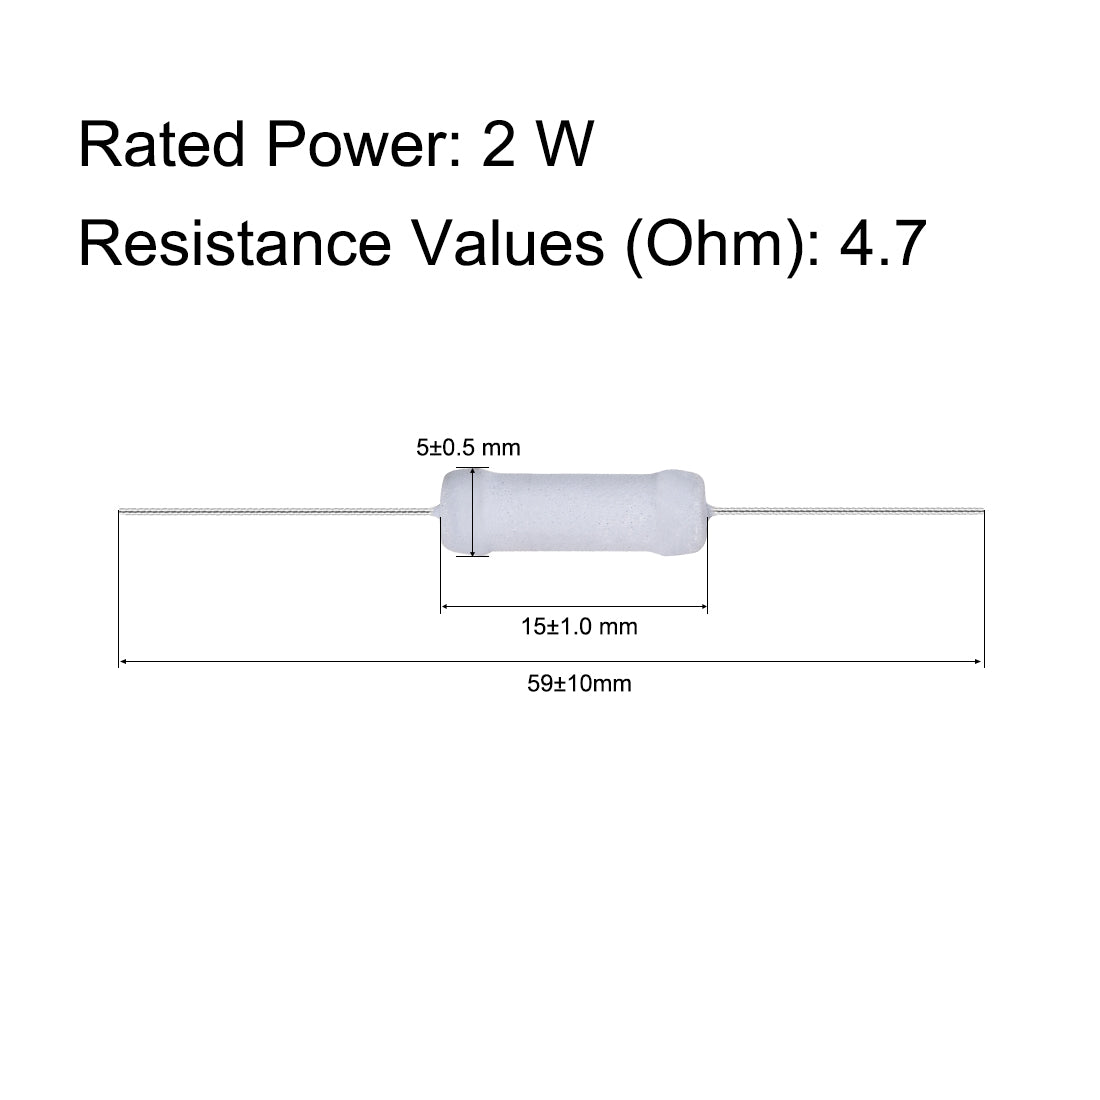 uxcell Uxcell 60pcs 2W 2 Watt Metal Oxide Film Resistor Axile Lead 4.7 Ohm ±5% Tolerance